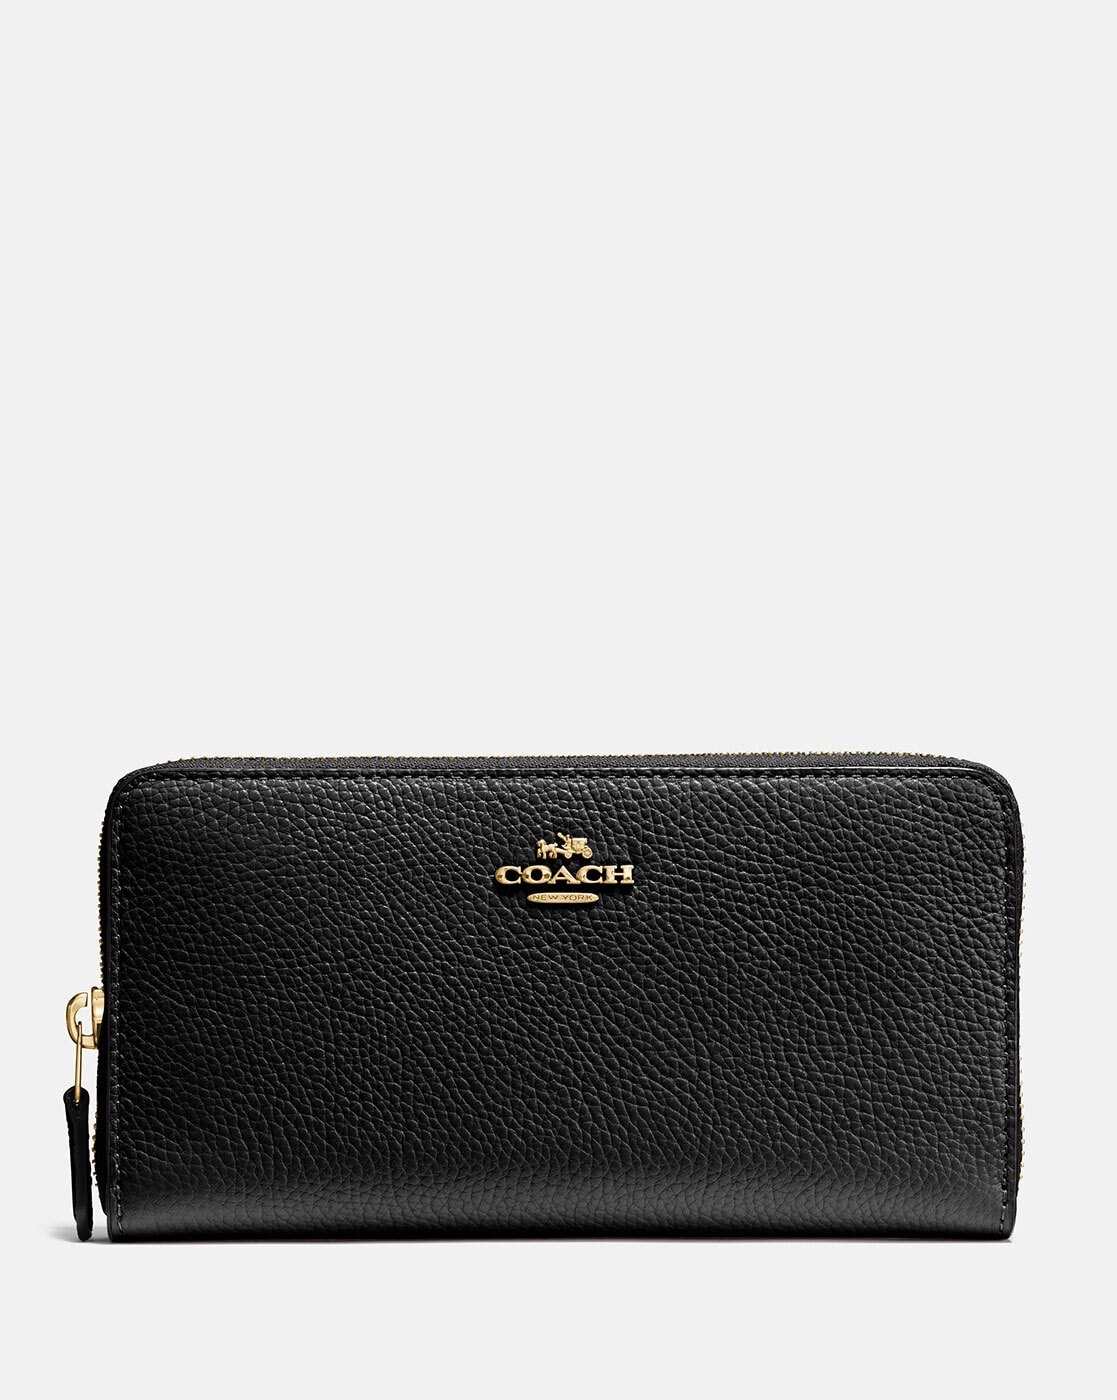 Coach purse: Shop the best deals from the Coach sale